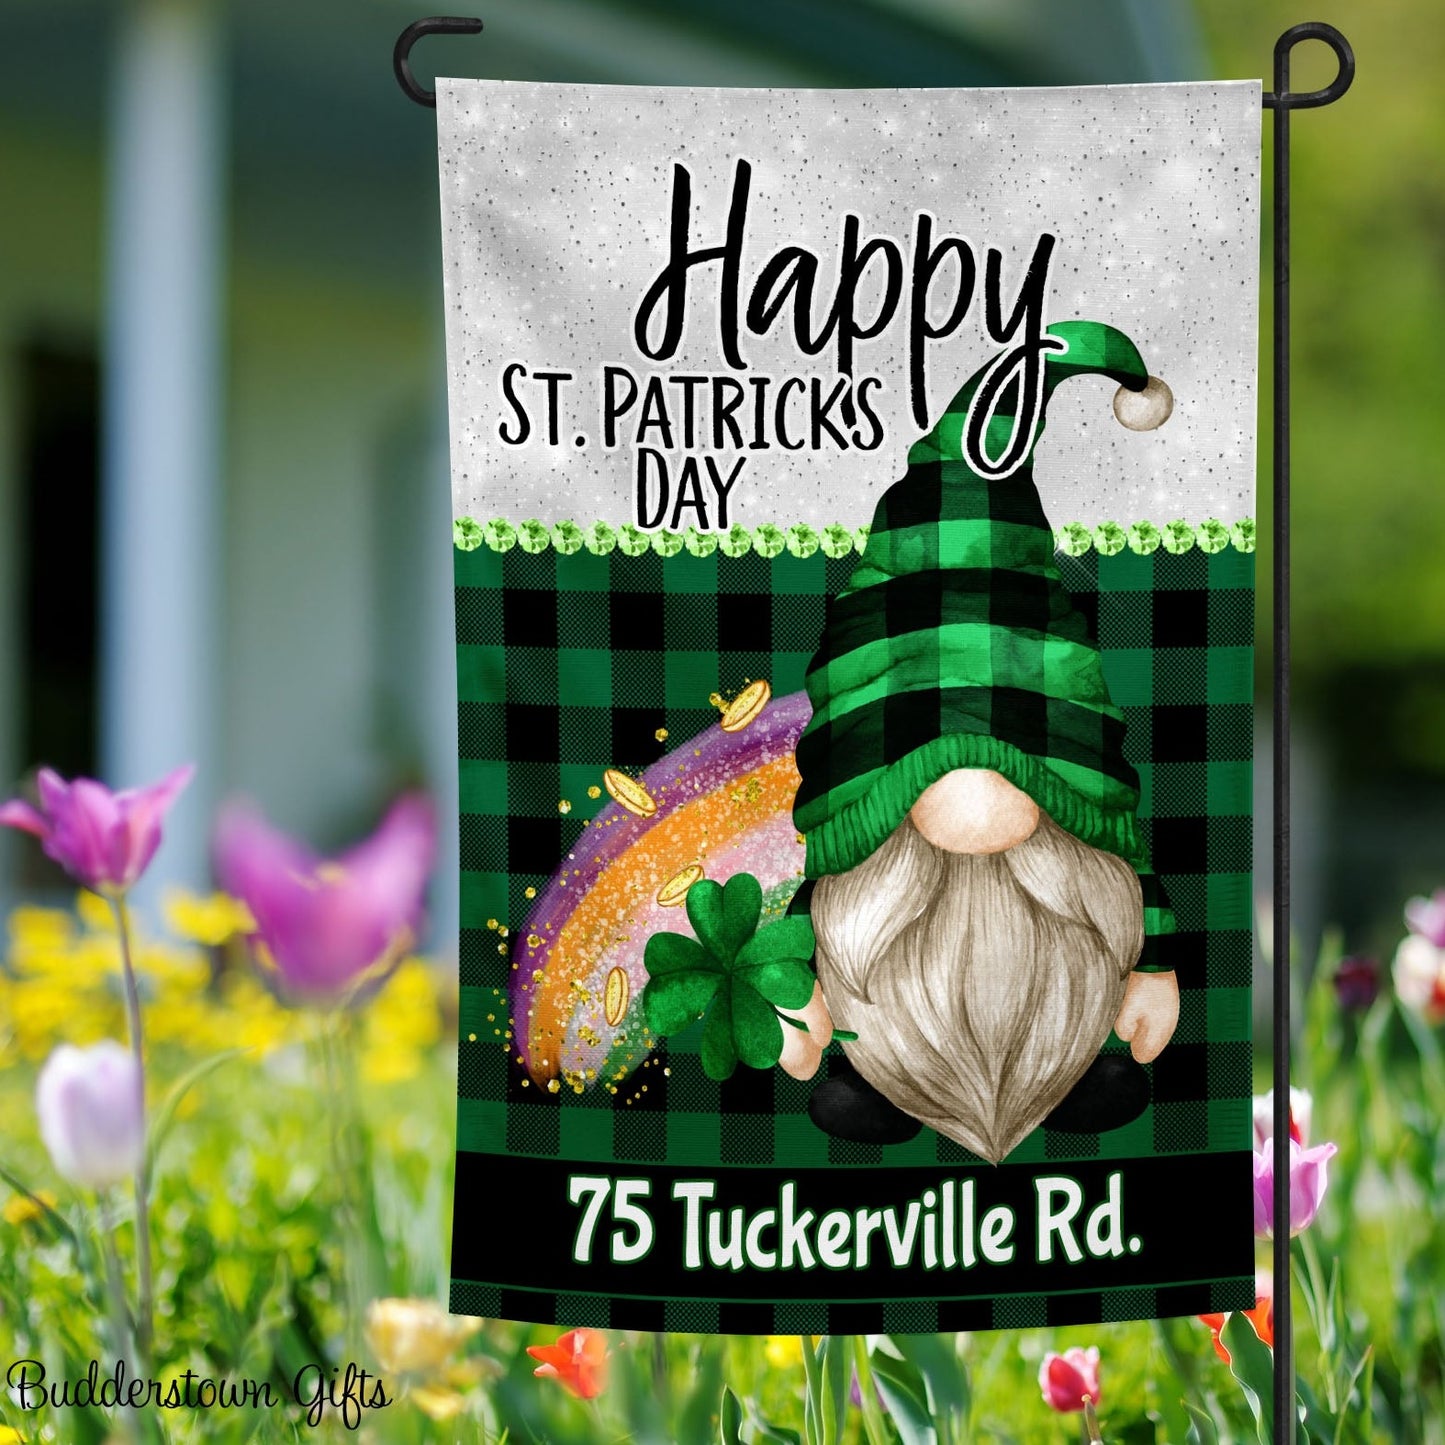 St. Patrick's Day Gnome Plaid Flag - 12x18 - Garden Flag